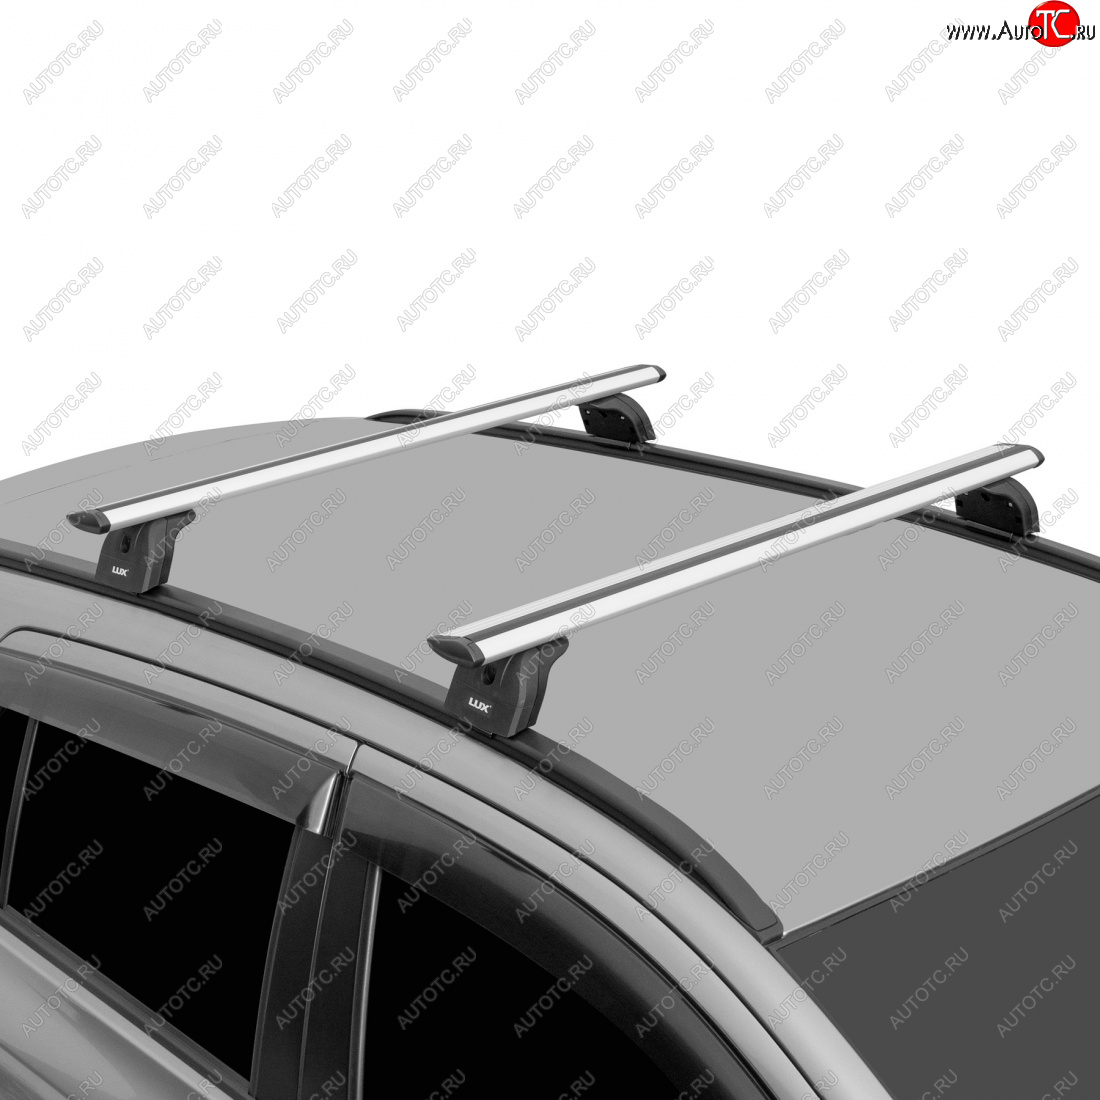 11 997 р. Багажник на крышу с низкими рейлингами сборе LUX  Volvo XC60 (2008-2017) (дуги аэро-трэвэл 120 см, без замка, серебро)